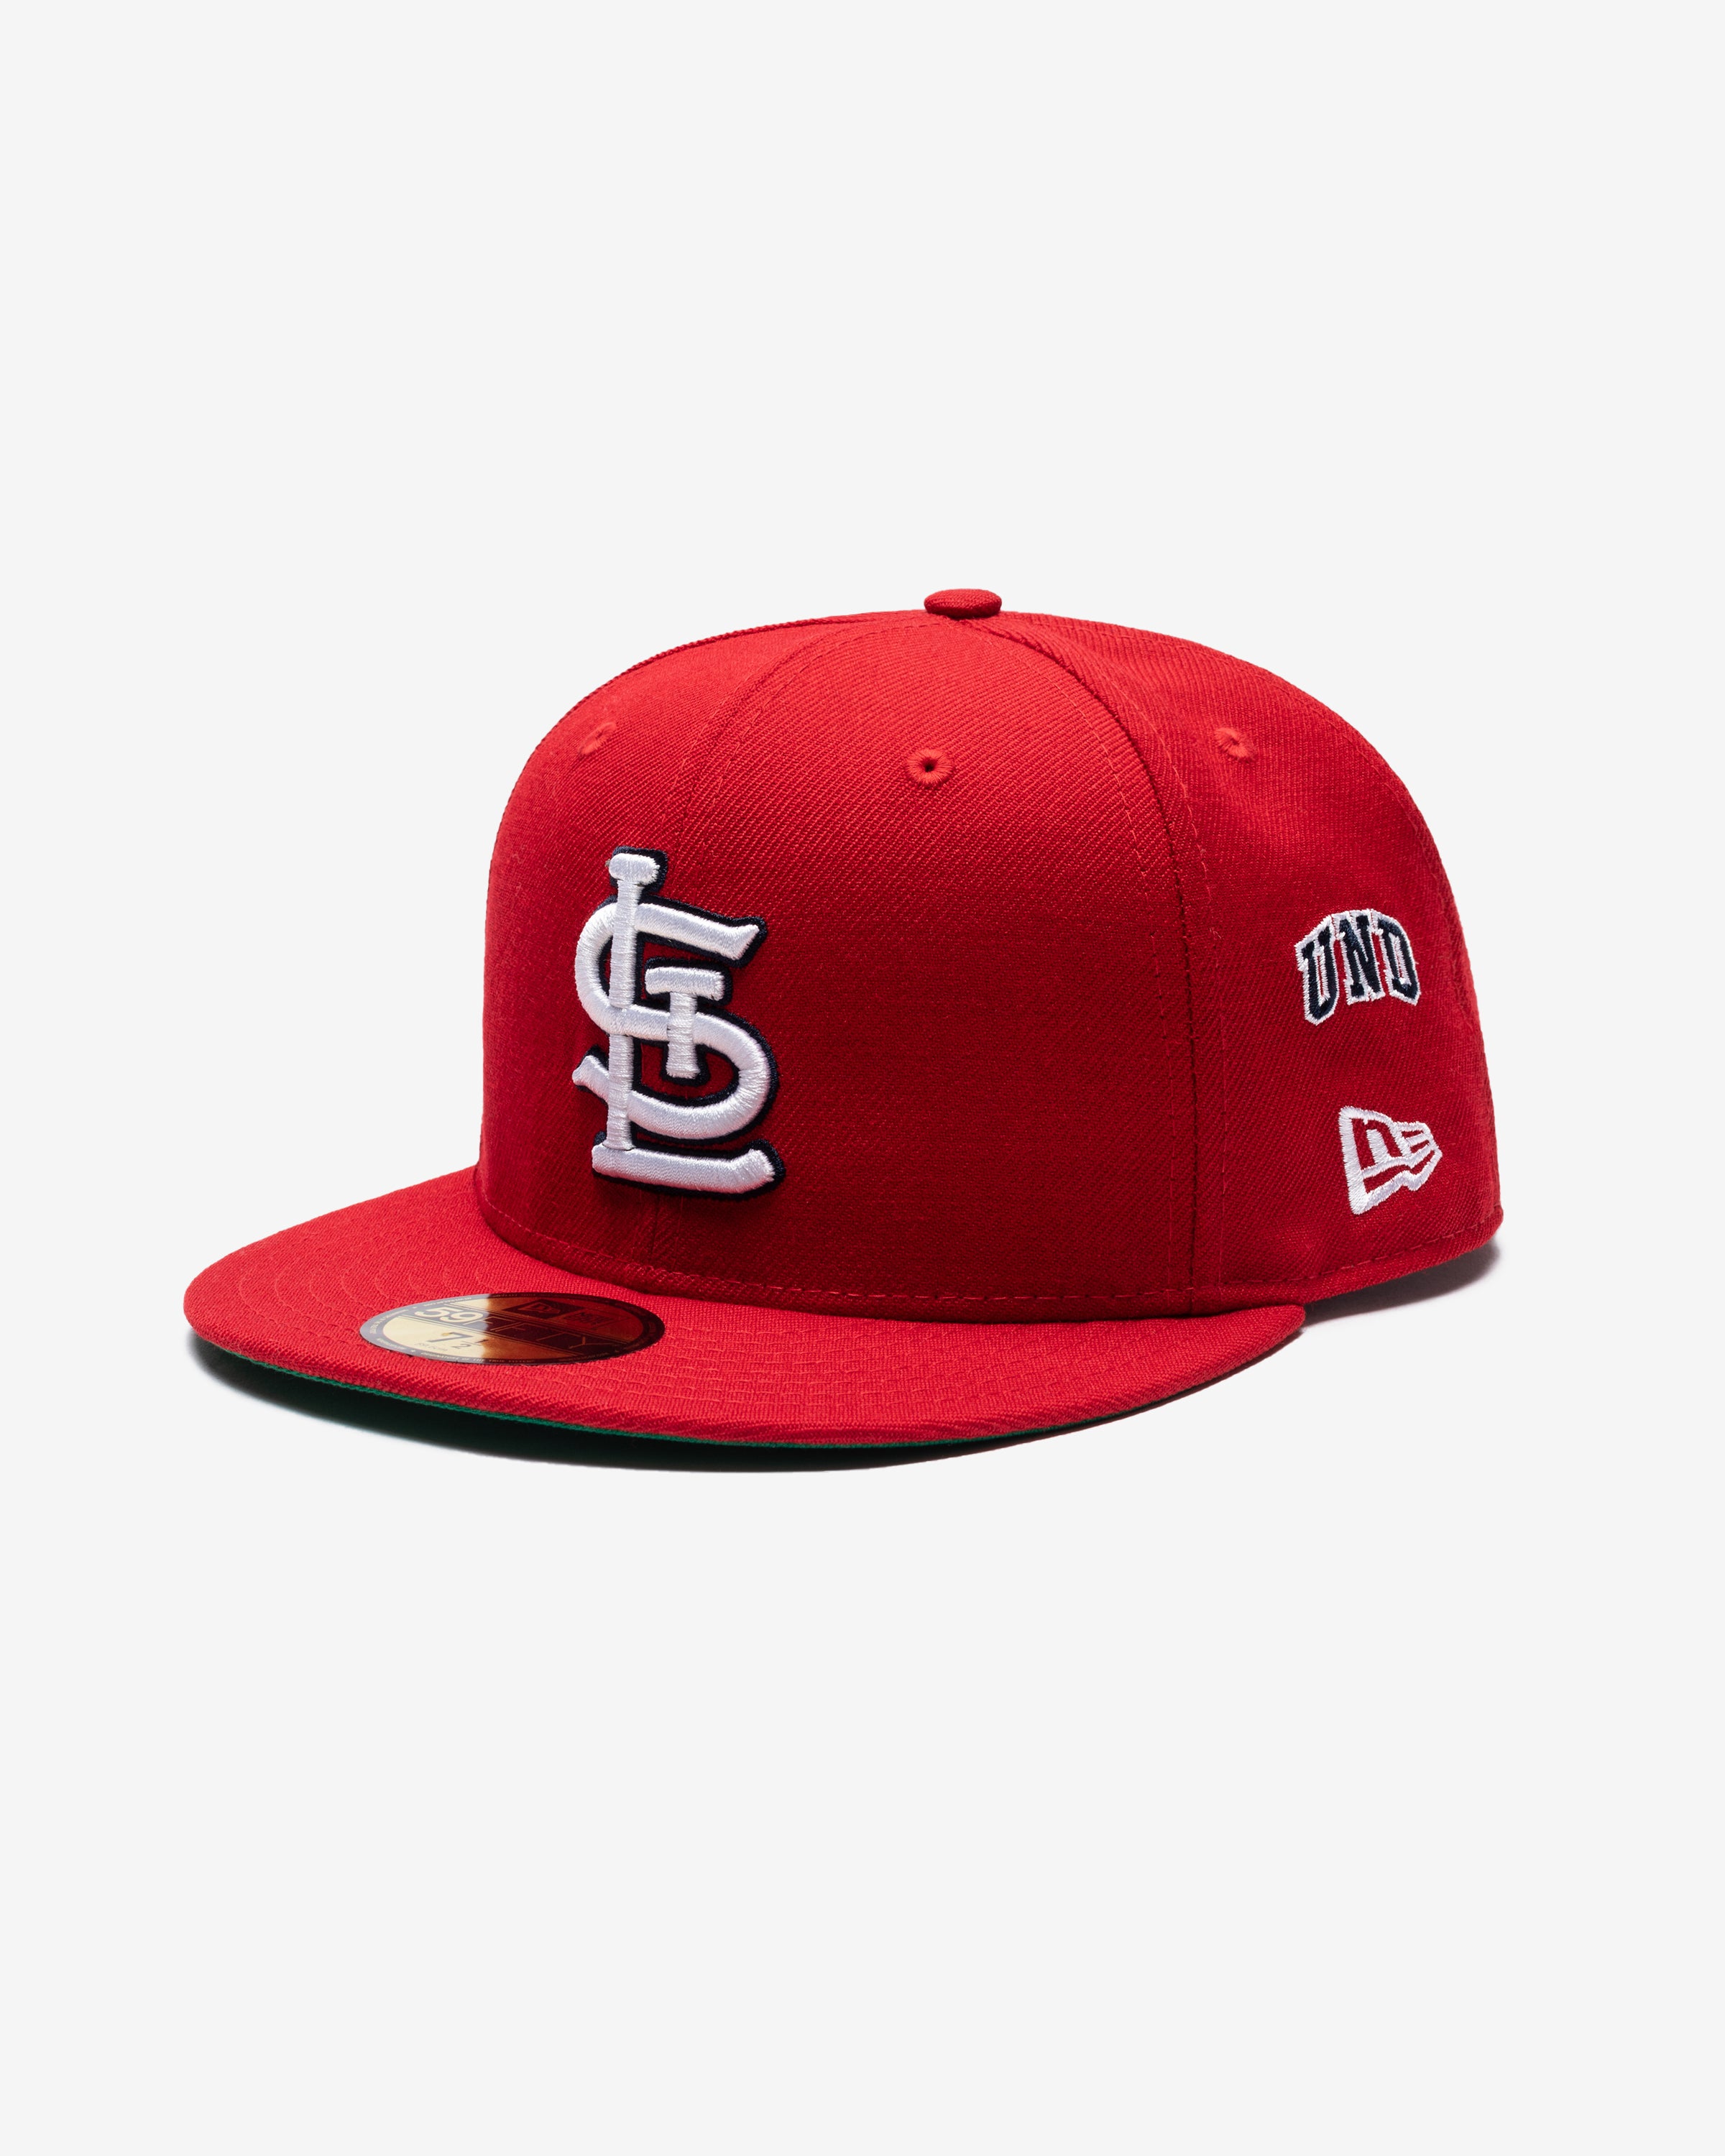 St. Louis Cardinals on X:  / X